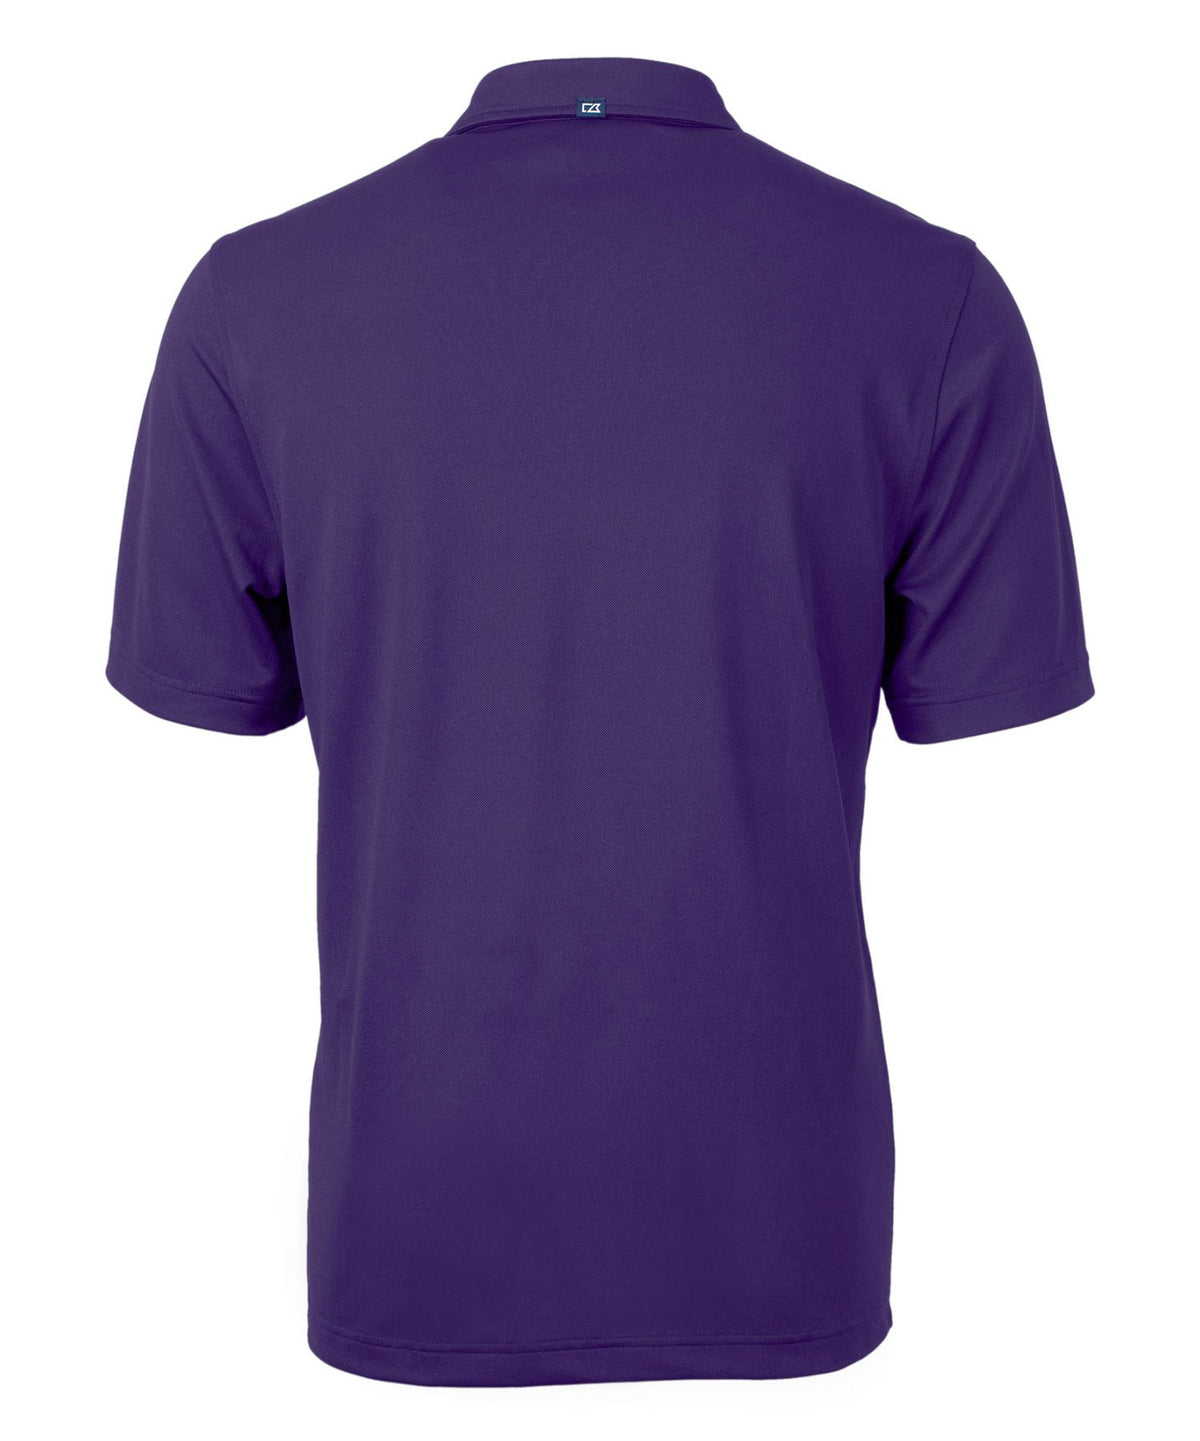 Cutter & Buck Louisiana State University Tigers Short Sleeve Polo Knit Shirt, Men's Big & Tall